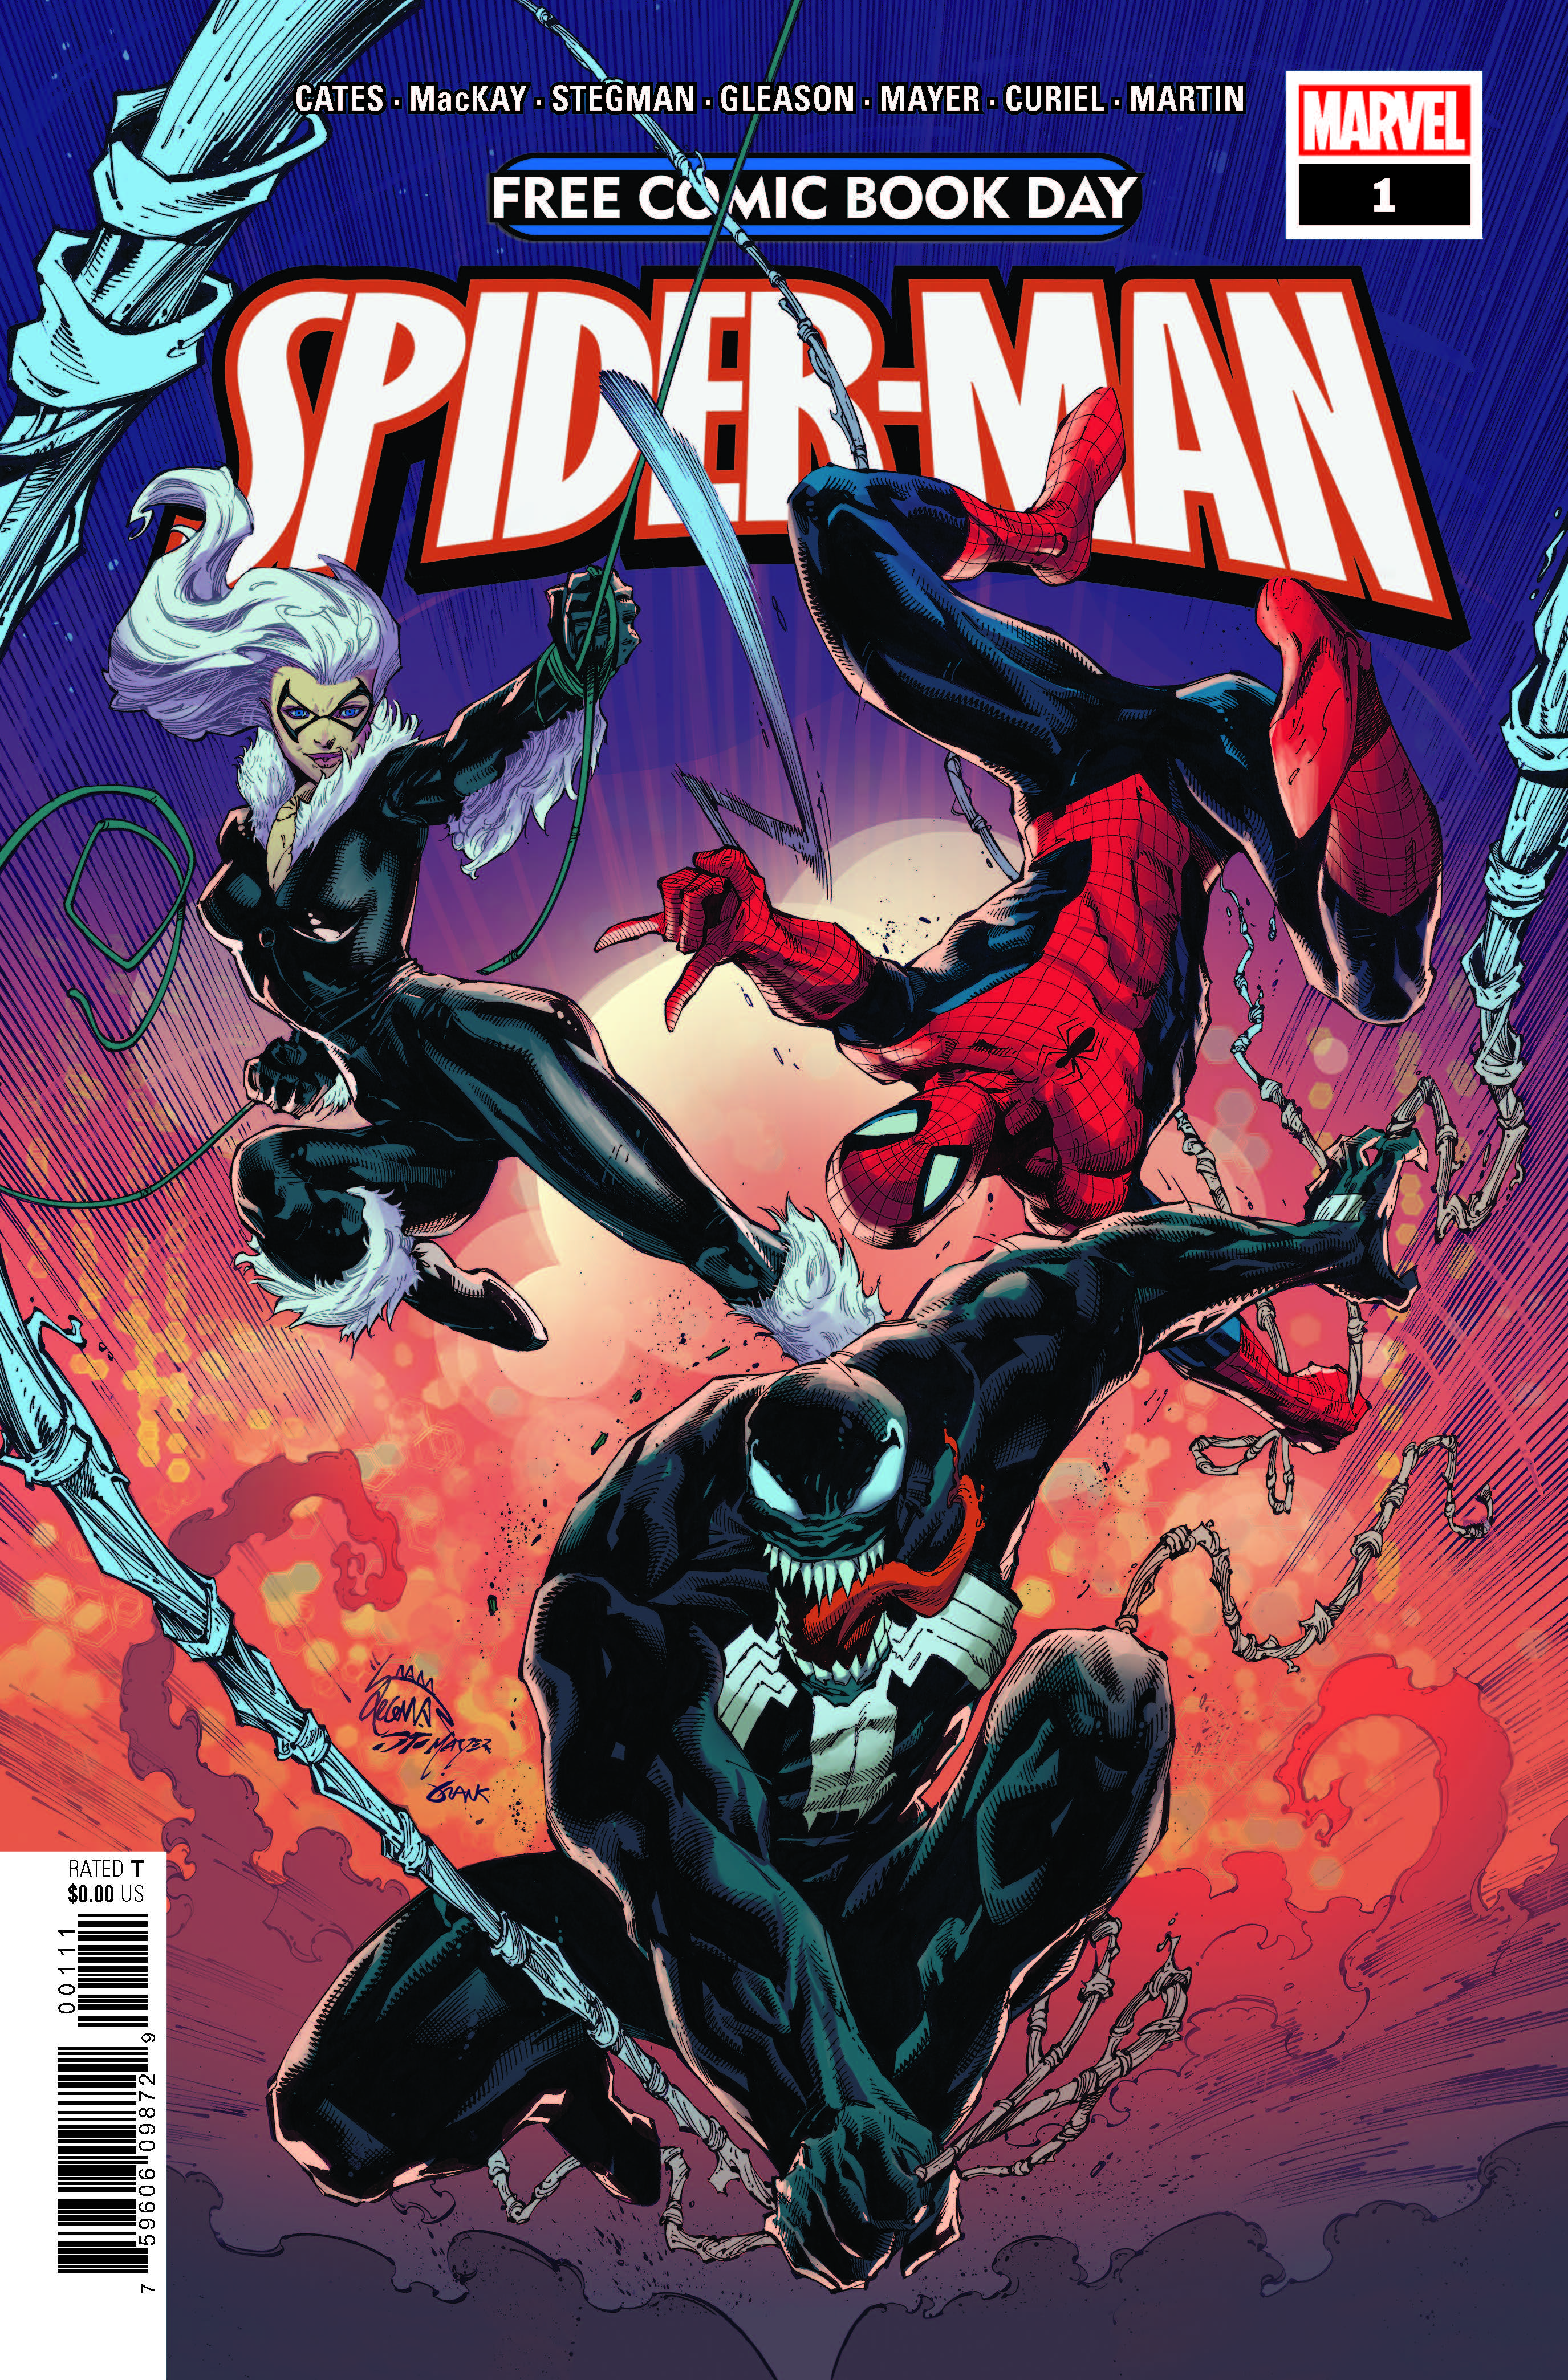 FCBD 2020 Spider-Man Venom #1 (Marvel Comics)